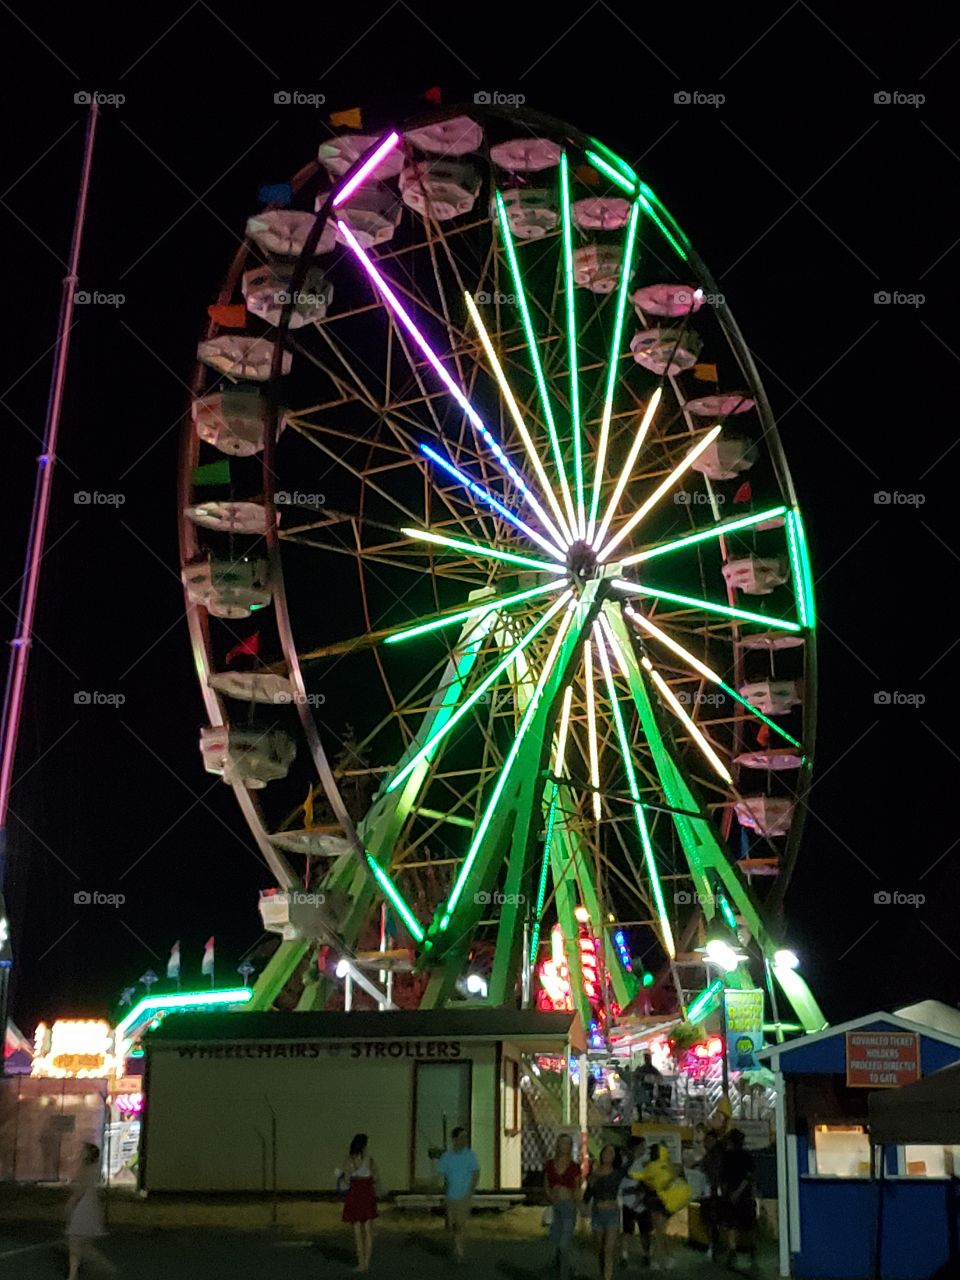 Festival ferris wheel at night